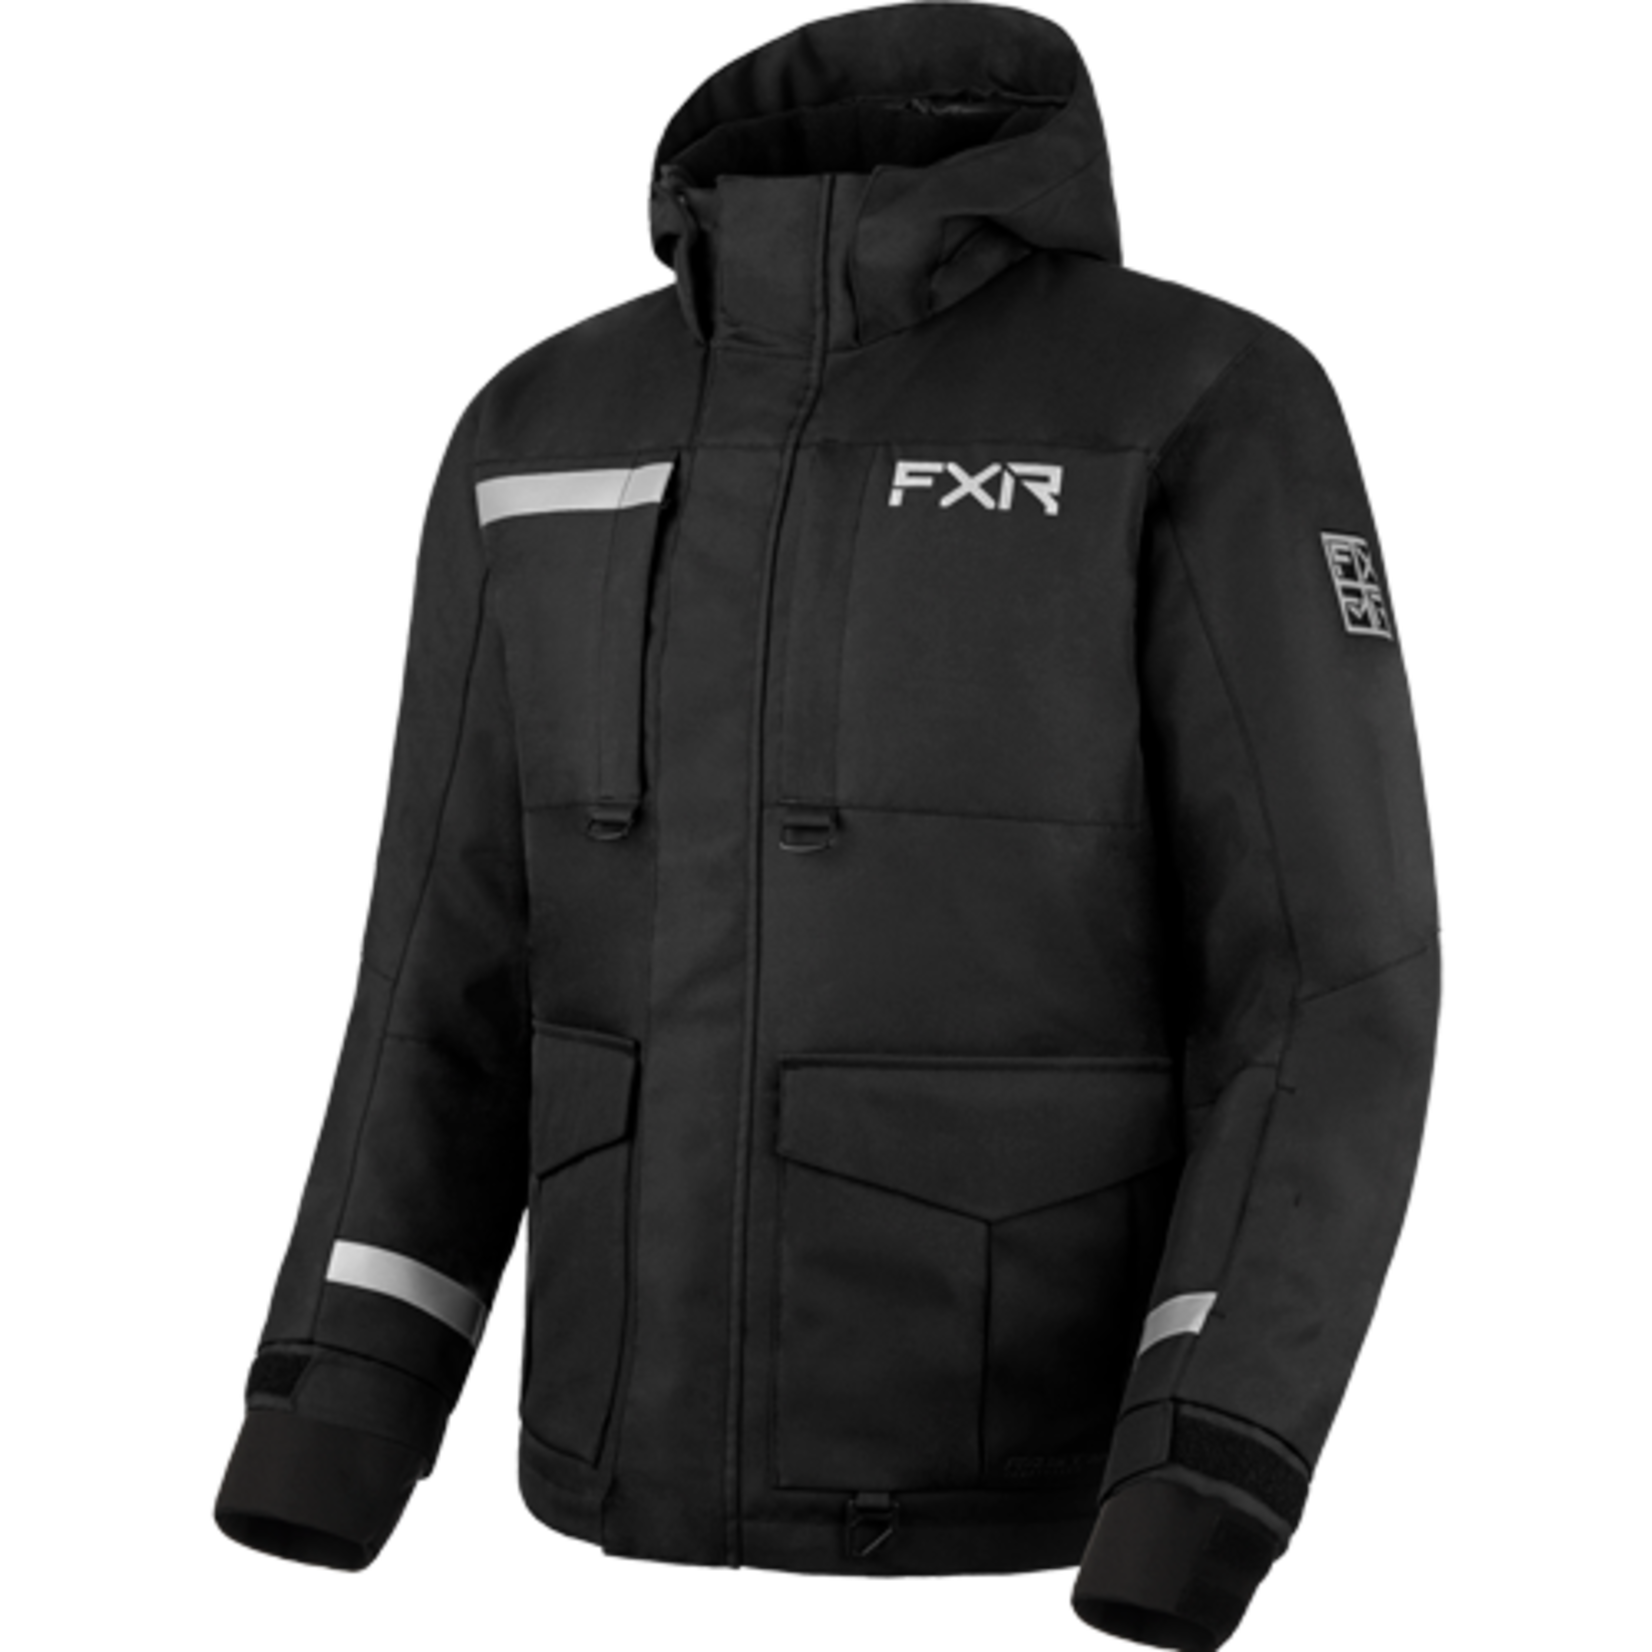 FXR FXR Winter Jacket, Excursion Ice Pro, Mens